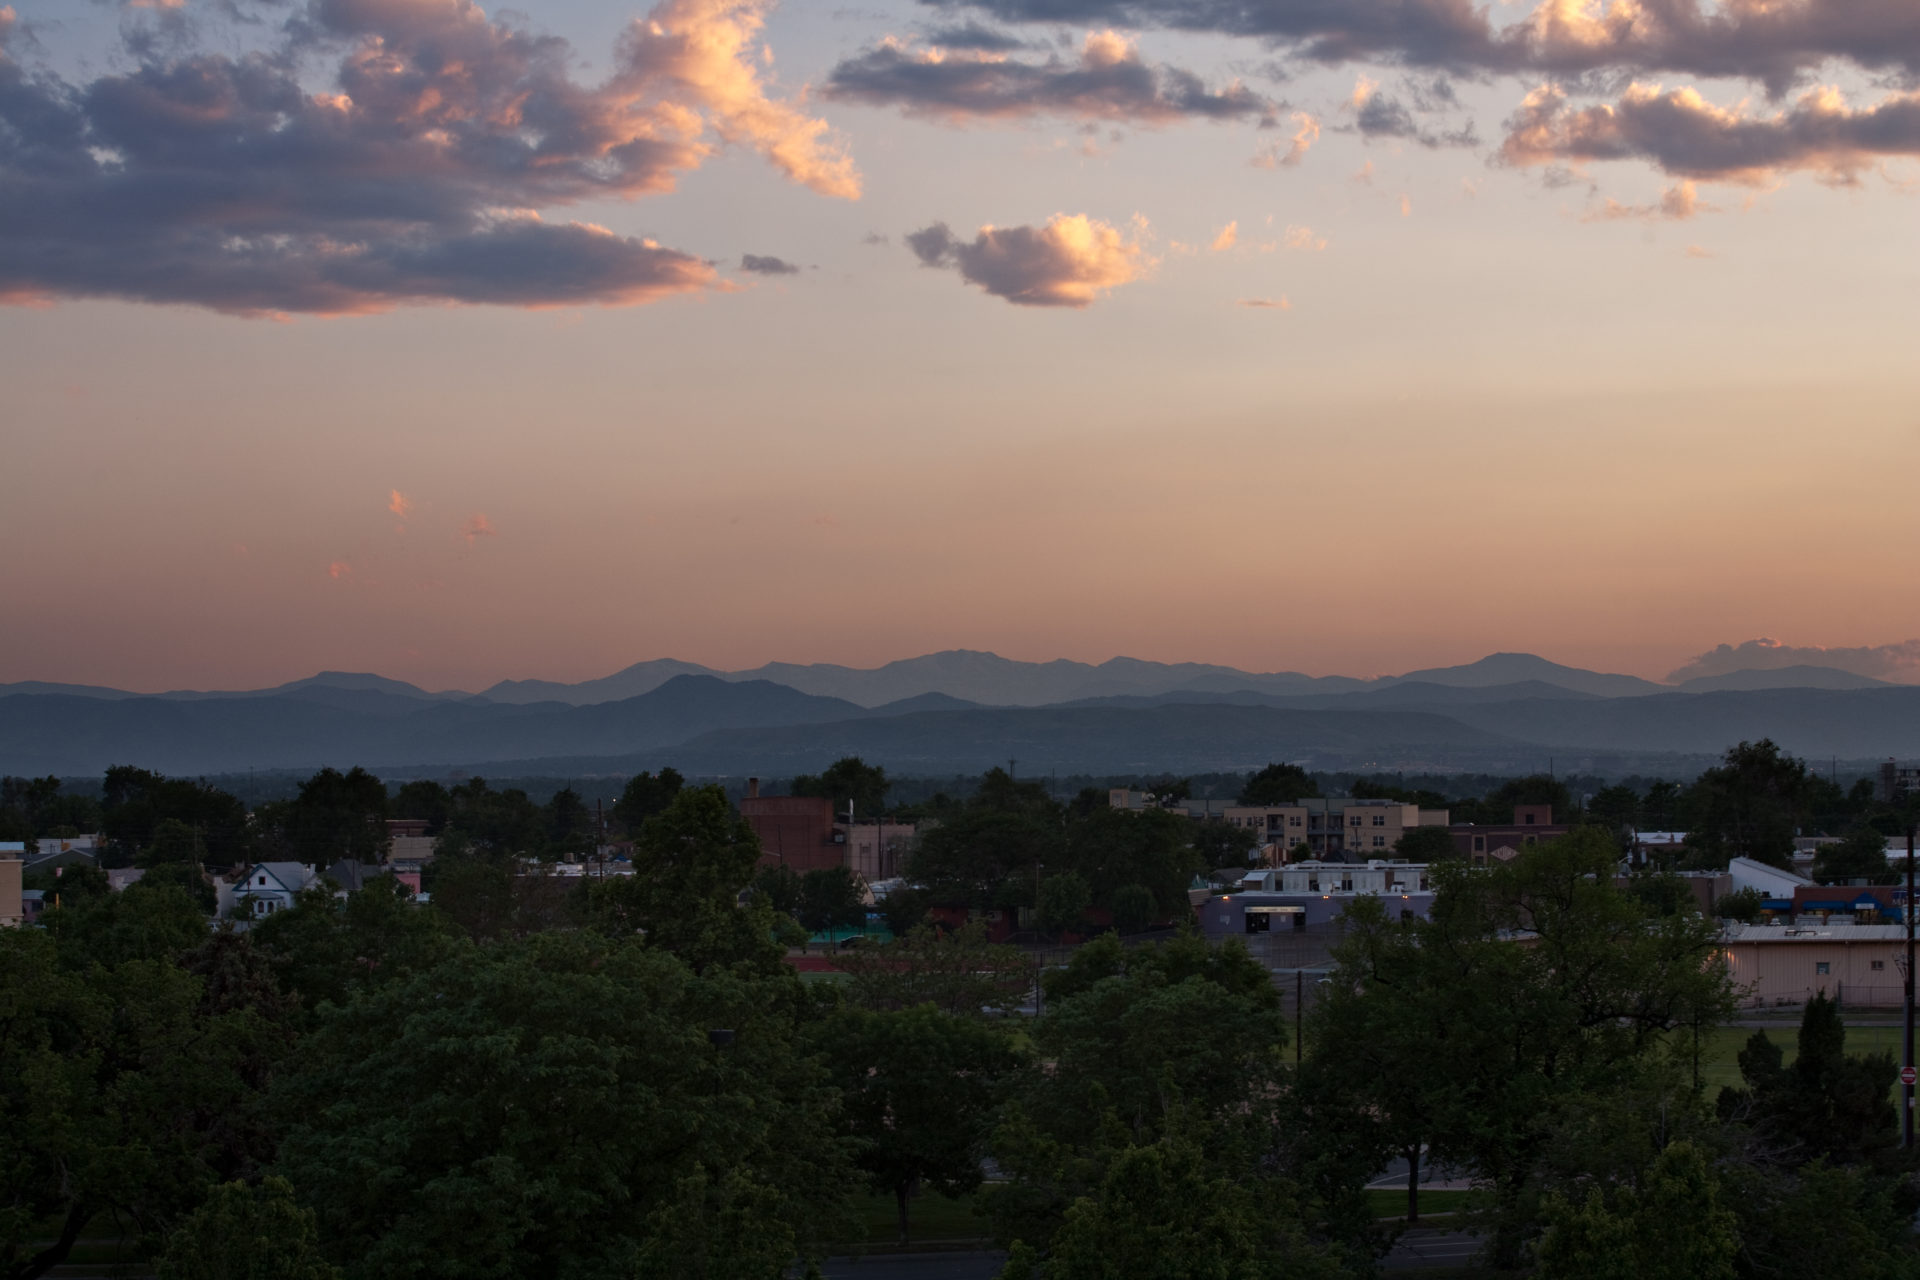 Mount Evans sunset - June 11, 2011